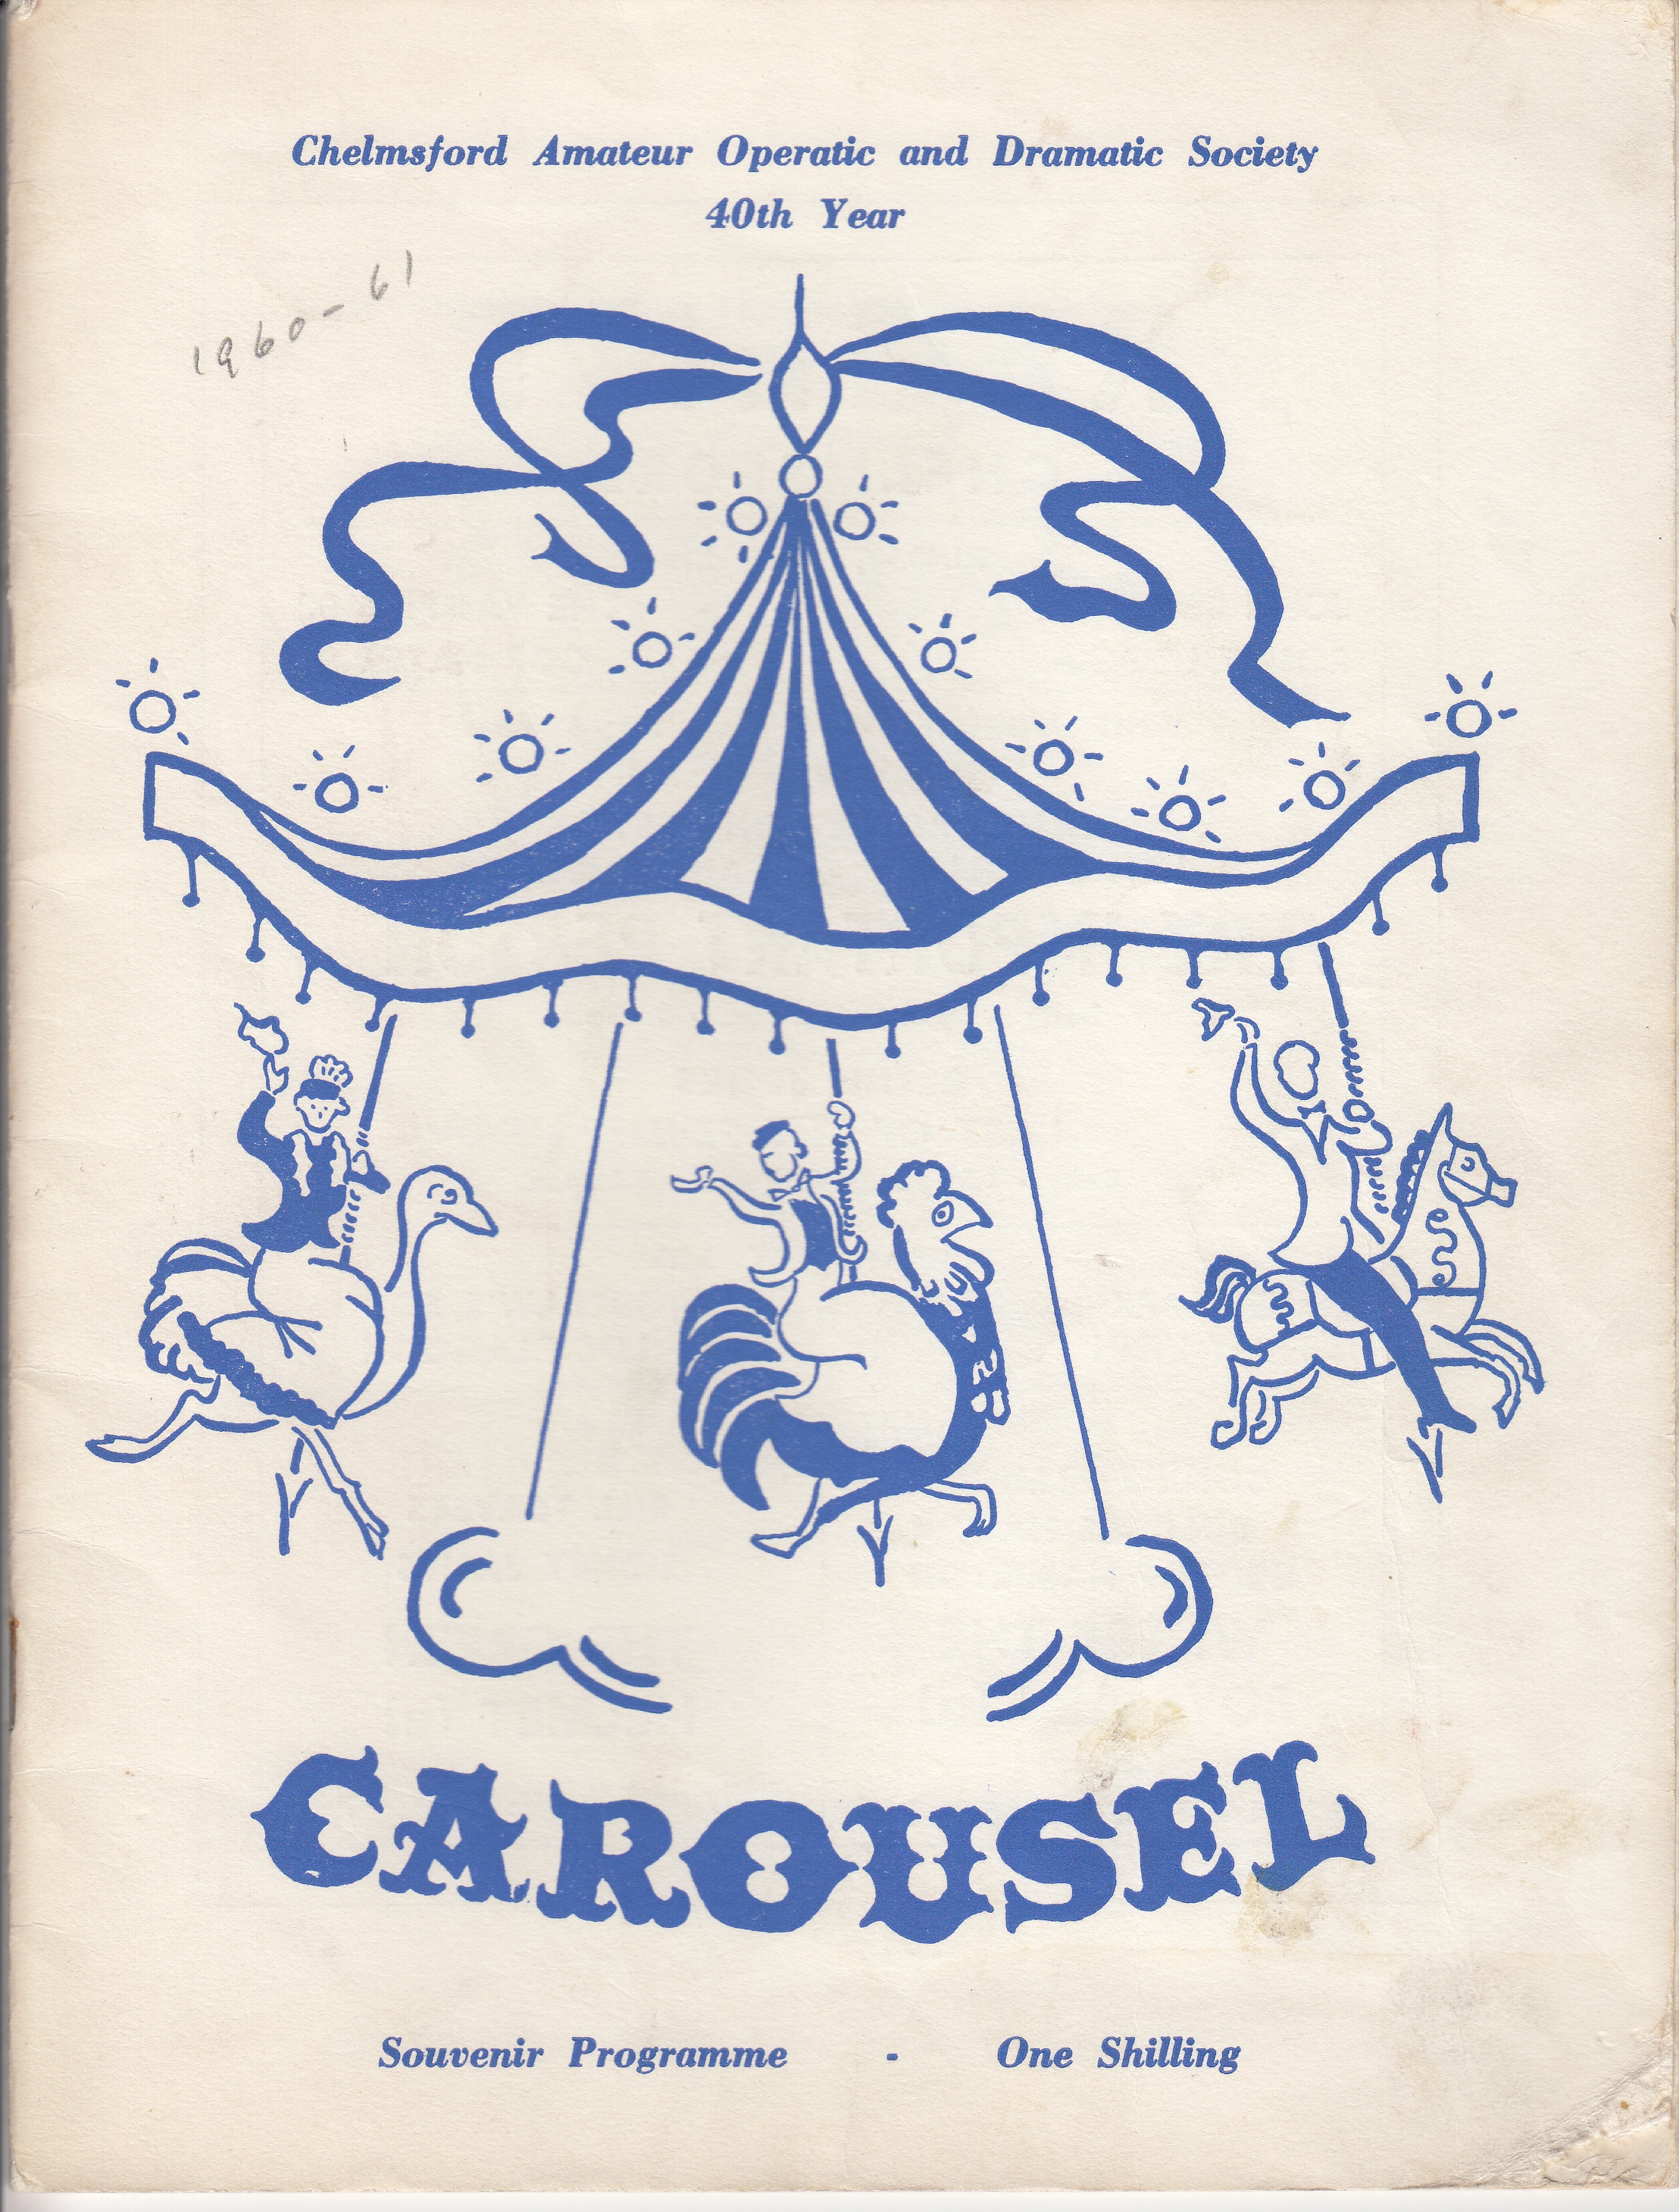 Carousel (1961)